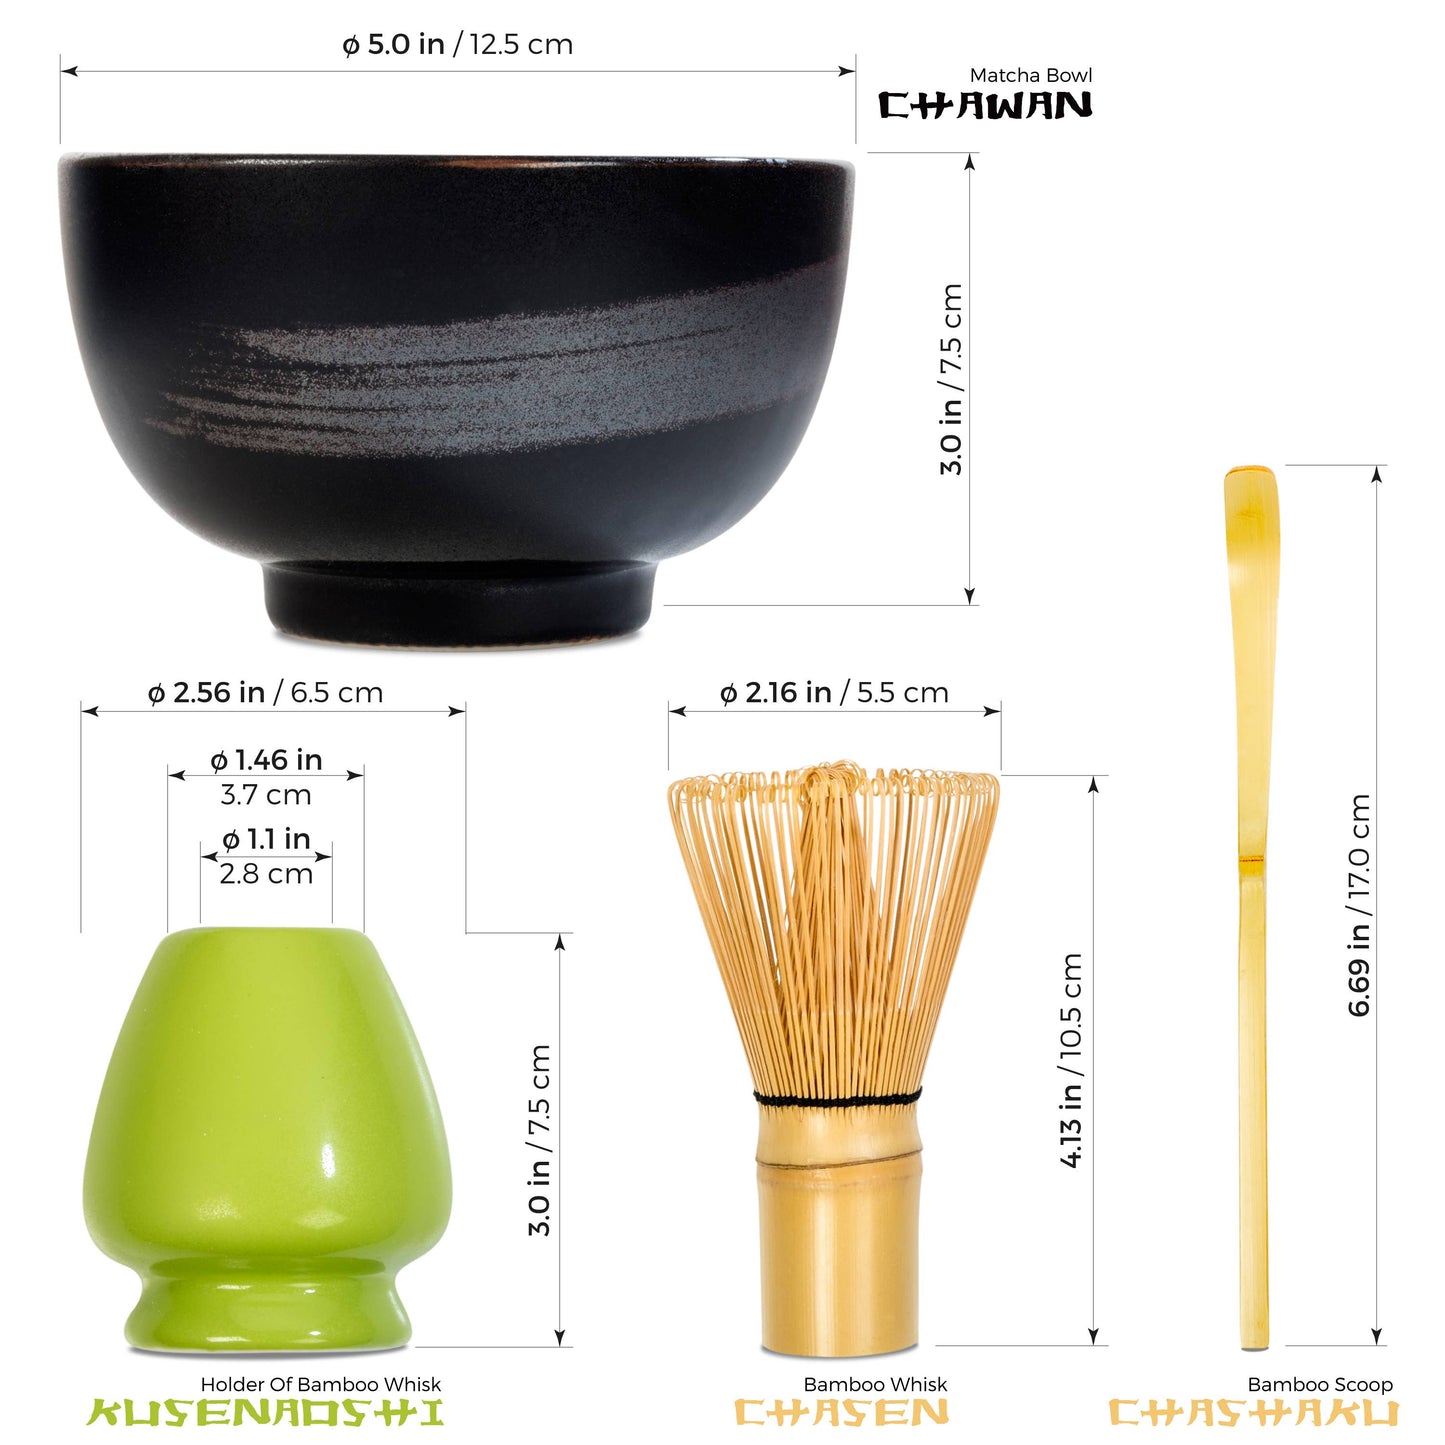 Matcha Tea Startup Gift Set - Black Japanese Bowl